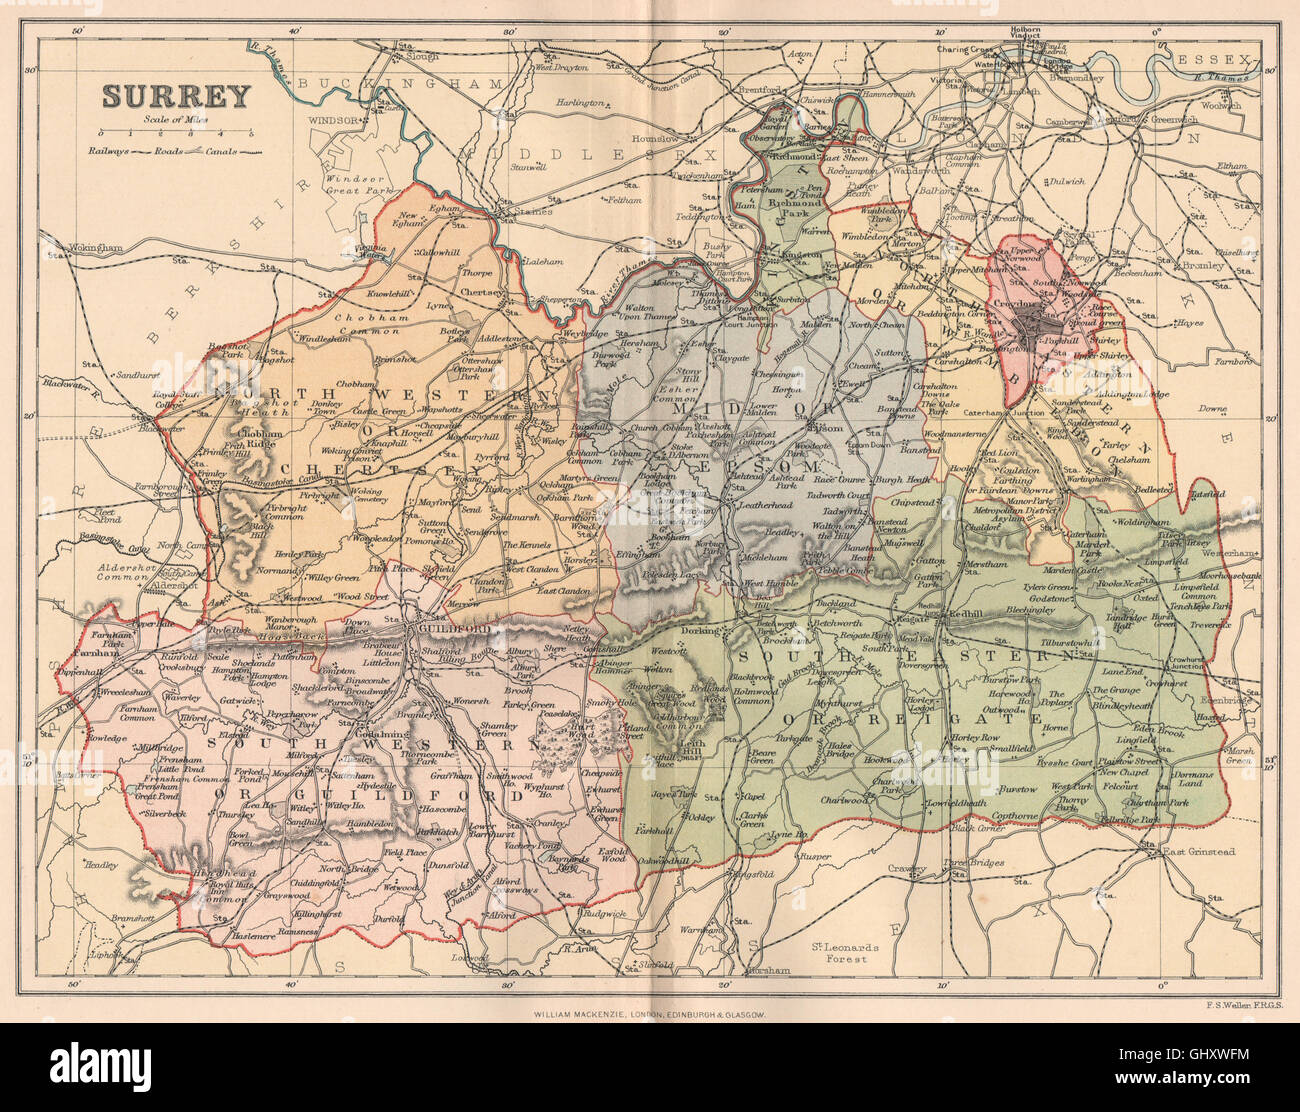 SURREY. Antique county map, 1893 Stock Photo - Alamy